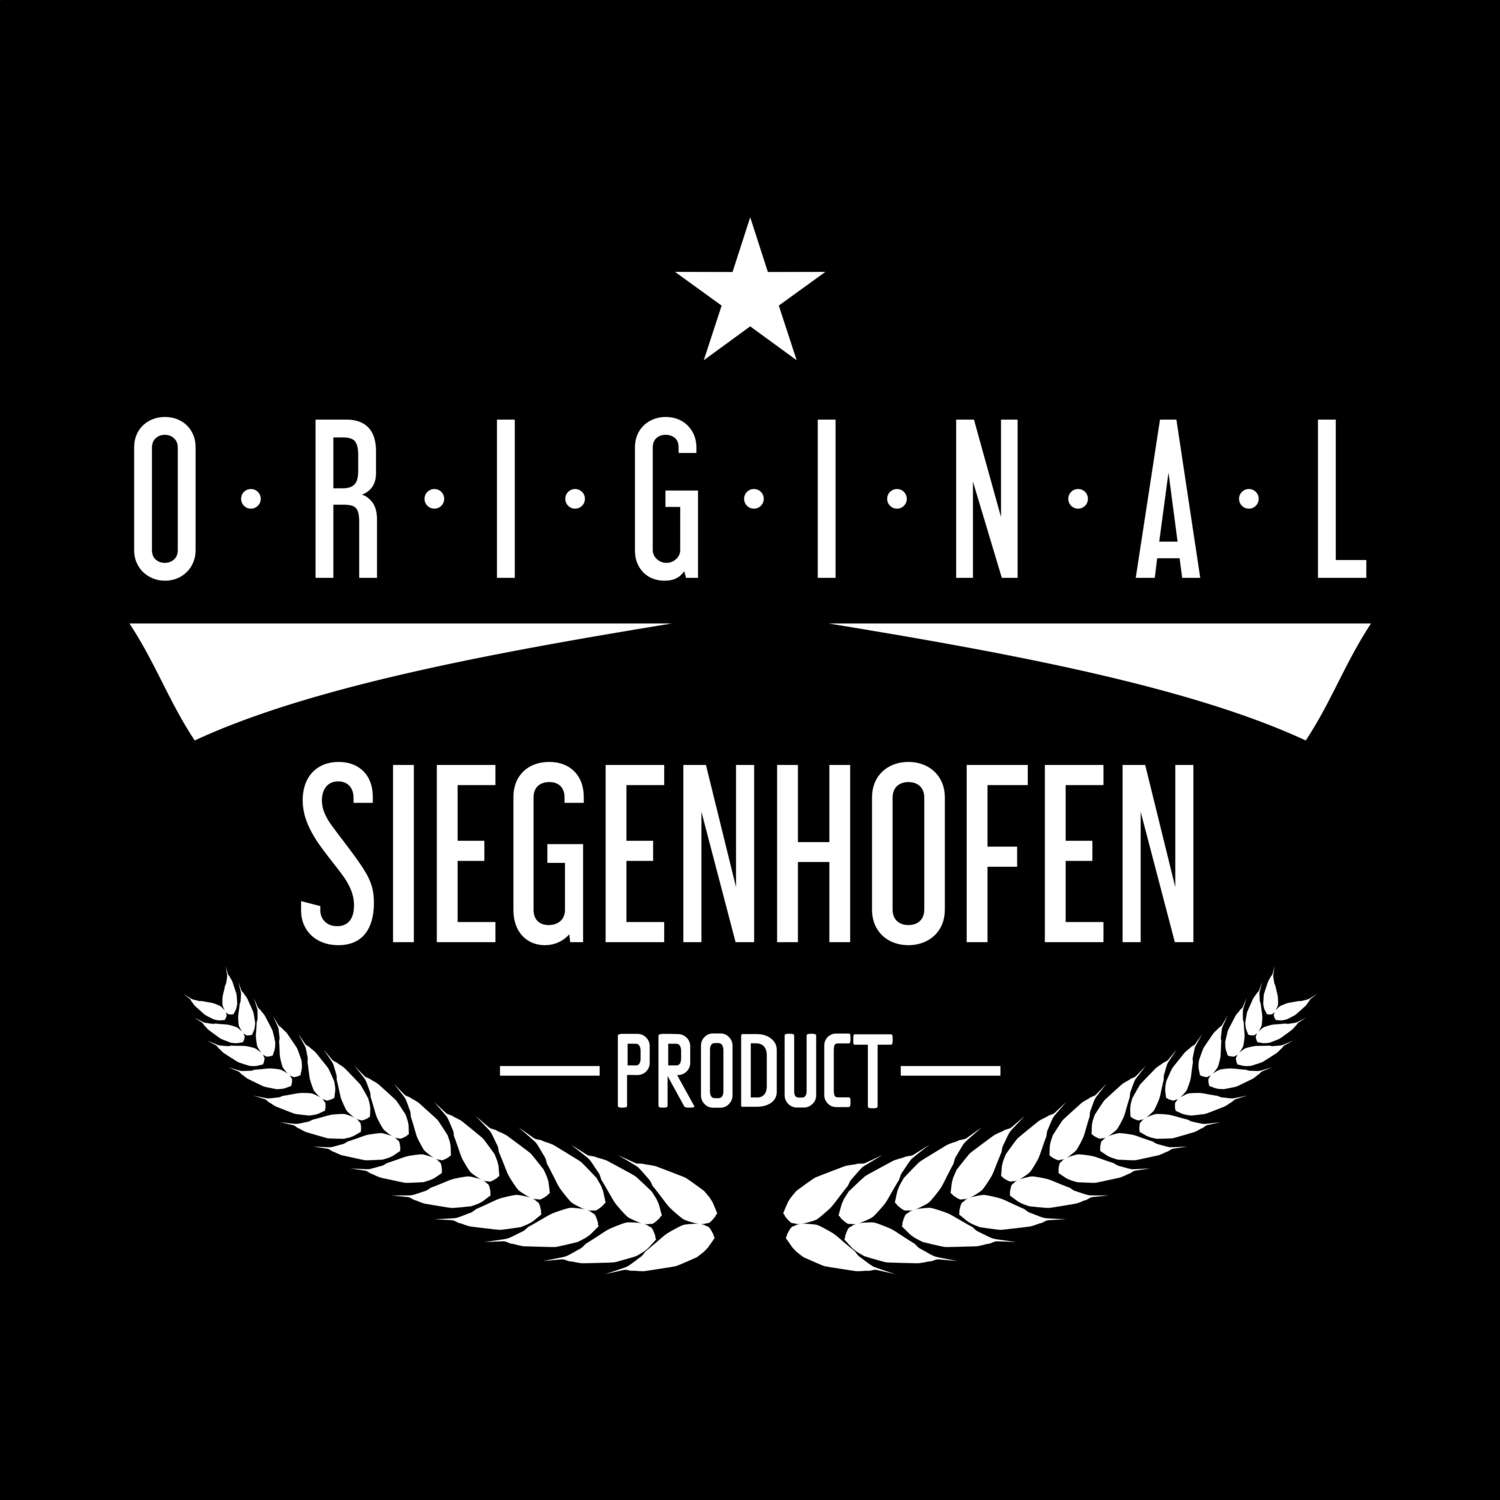 Siegenhofen T-Shirt »Original Product«